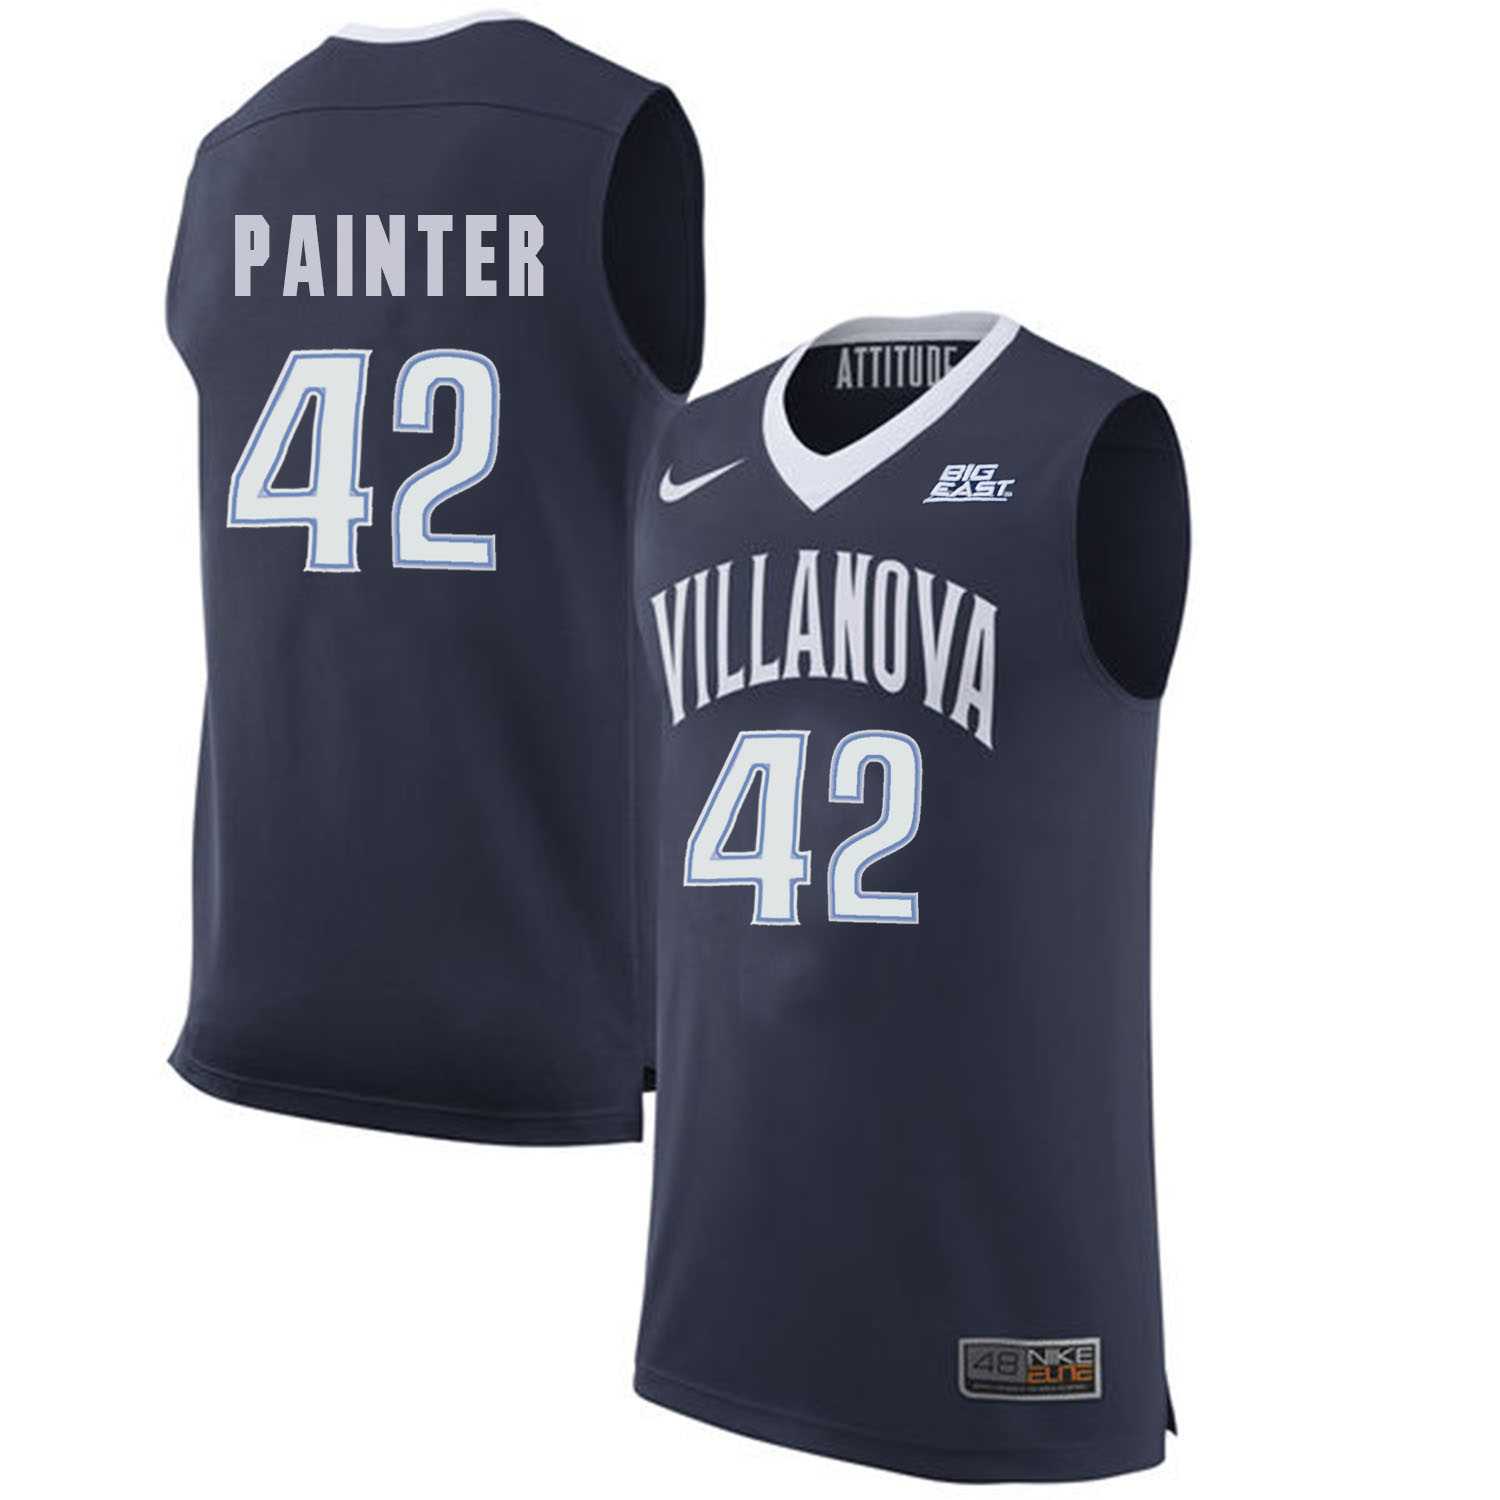 Villanova Wildcats 42 Dylan Painter Navy College Basketball Elite Jersey Dzhi